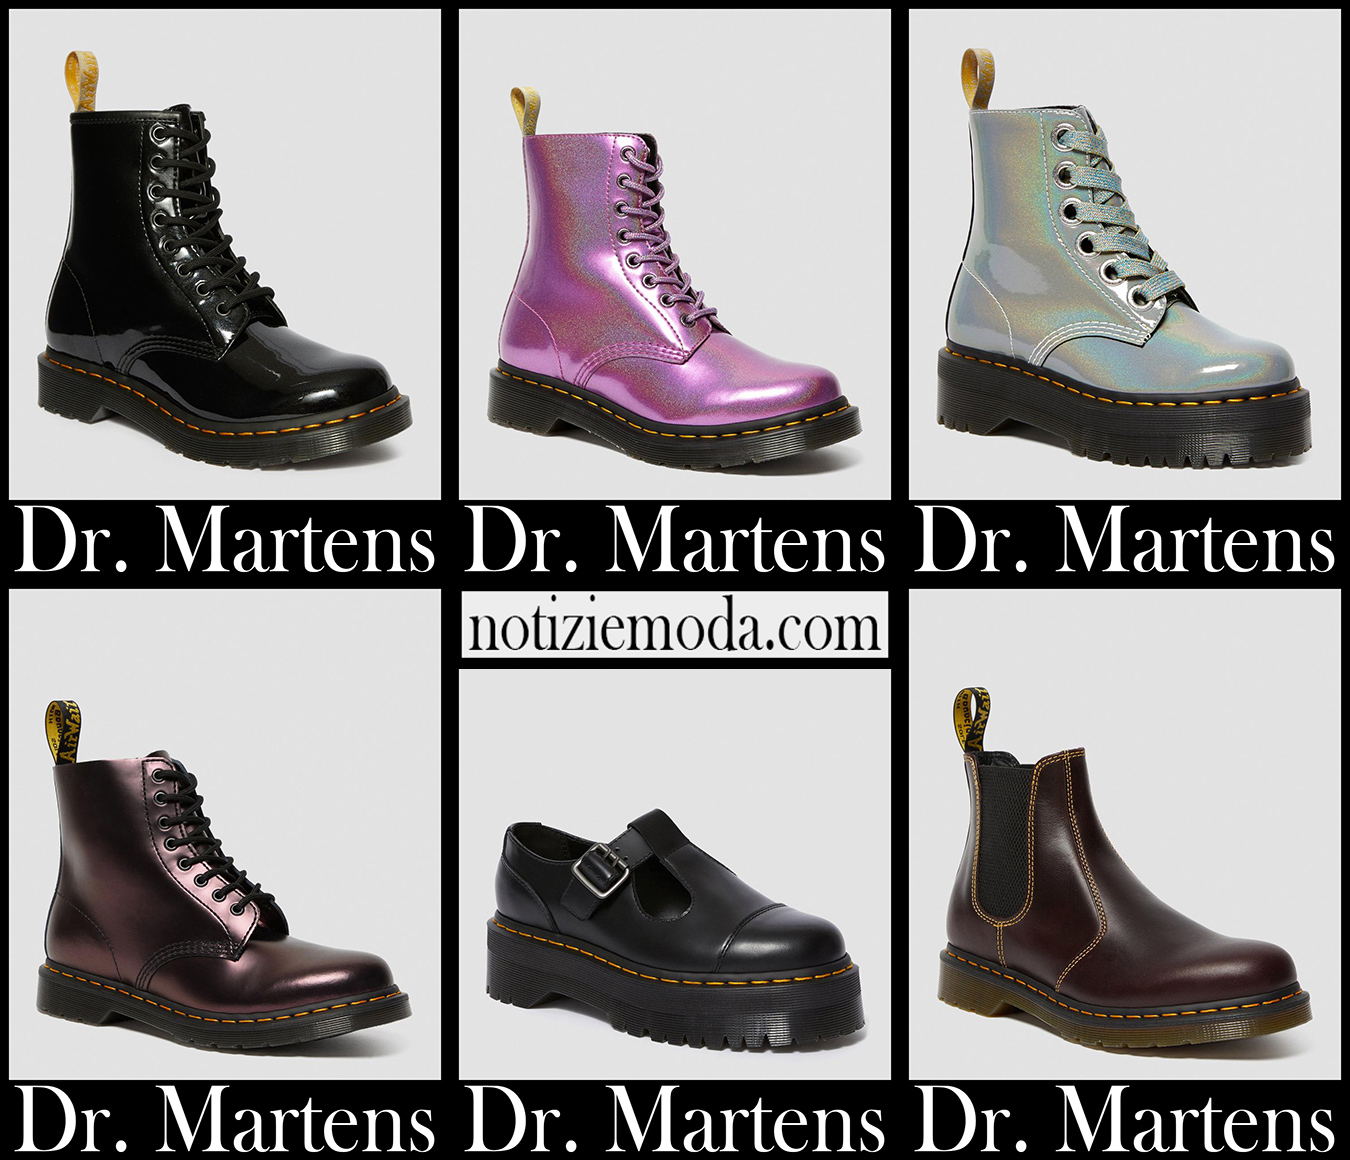 Nuovi arrivi scarpe Dr. Martens 2021 stivali moda donna